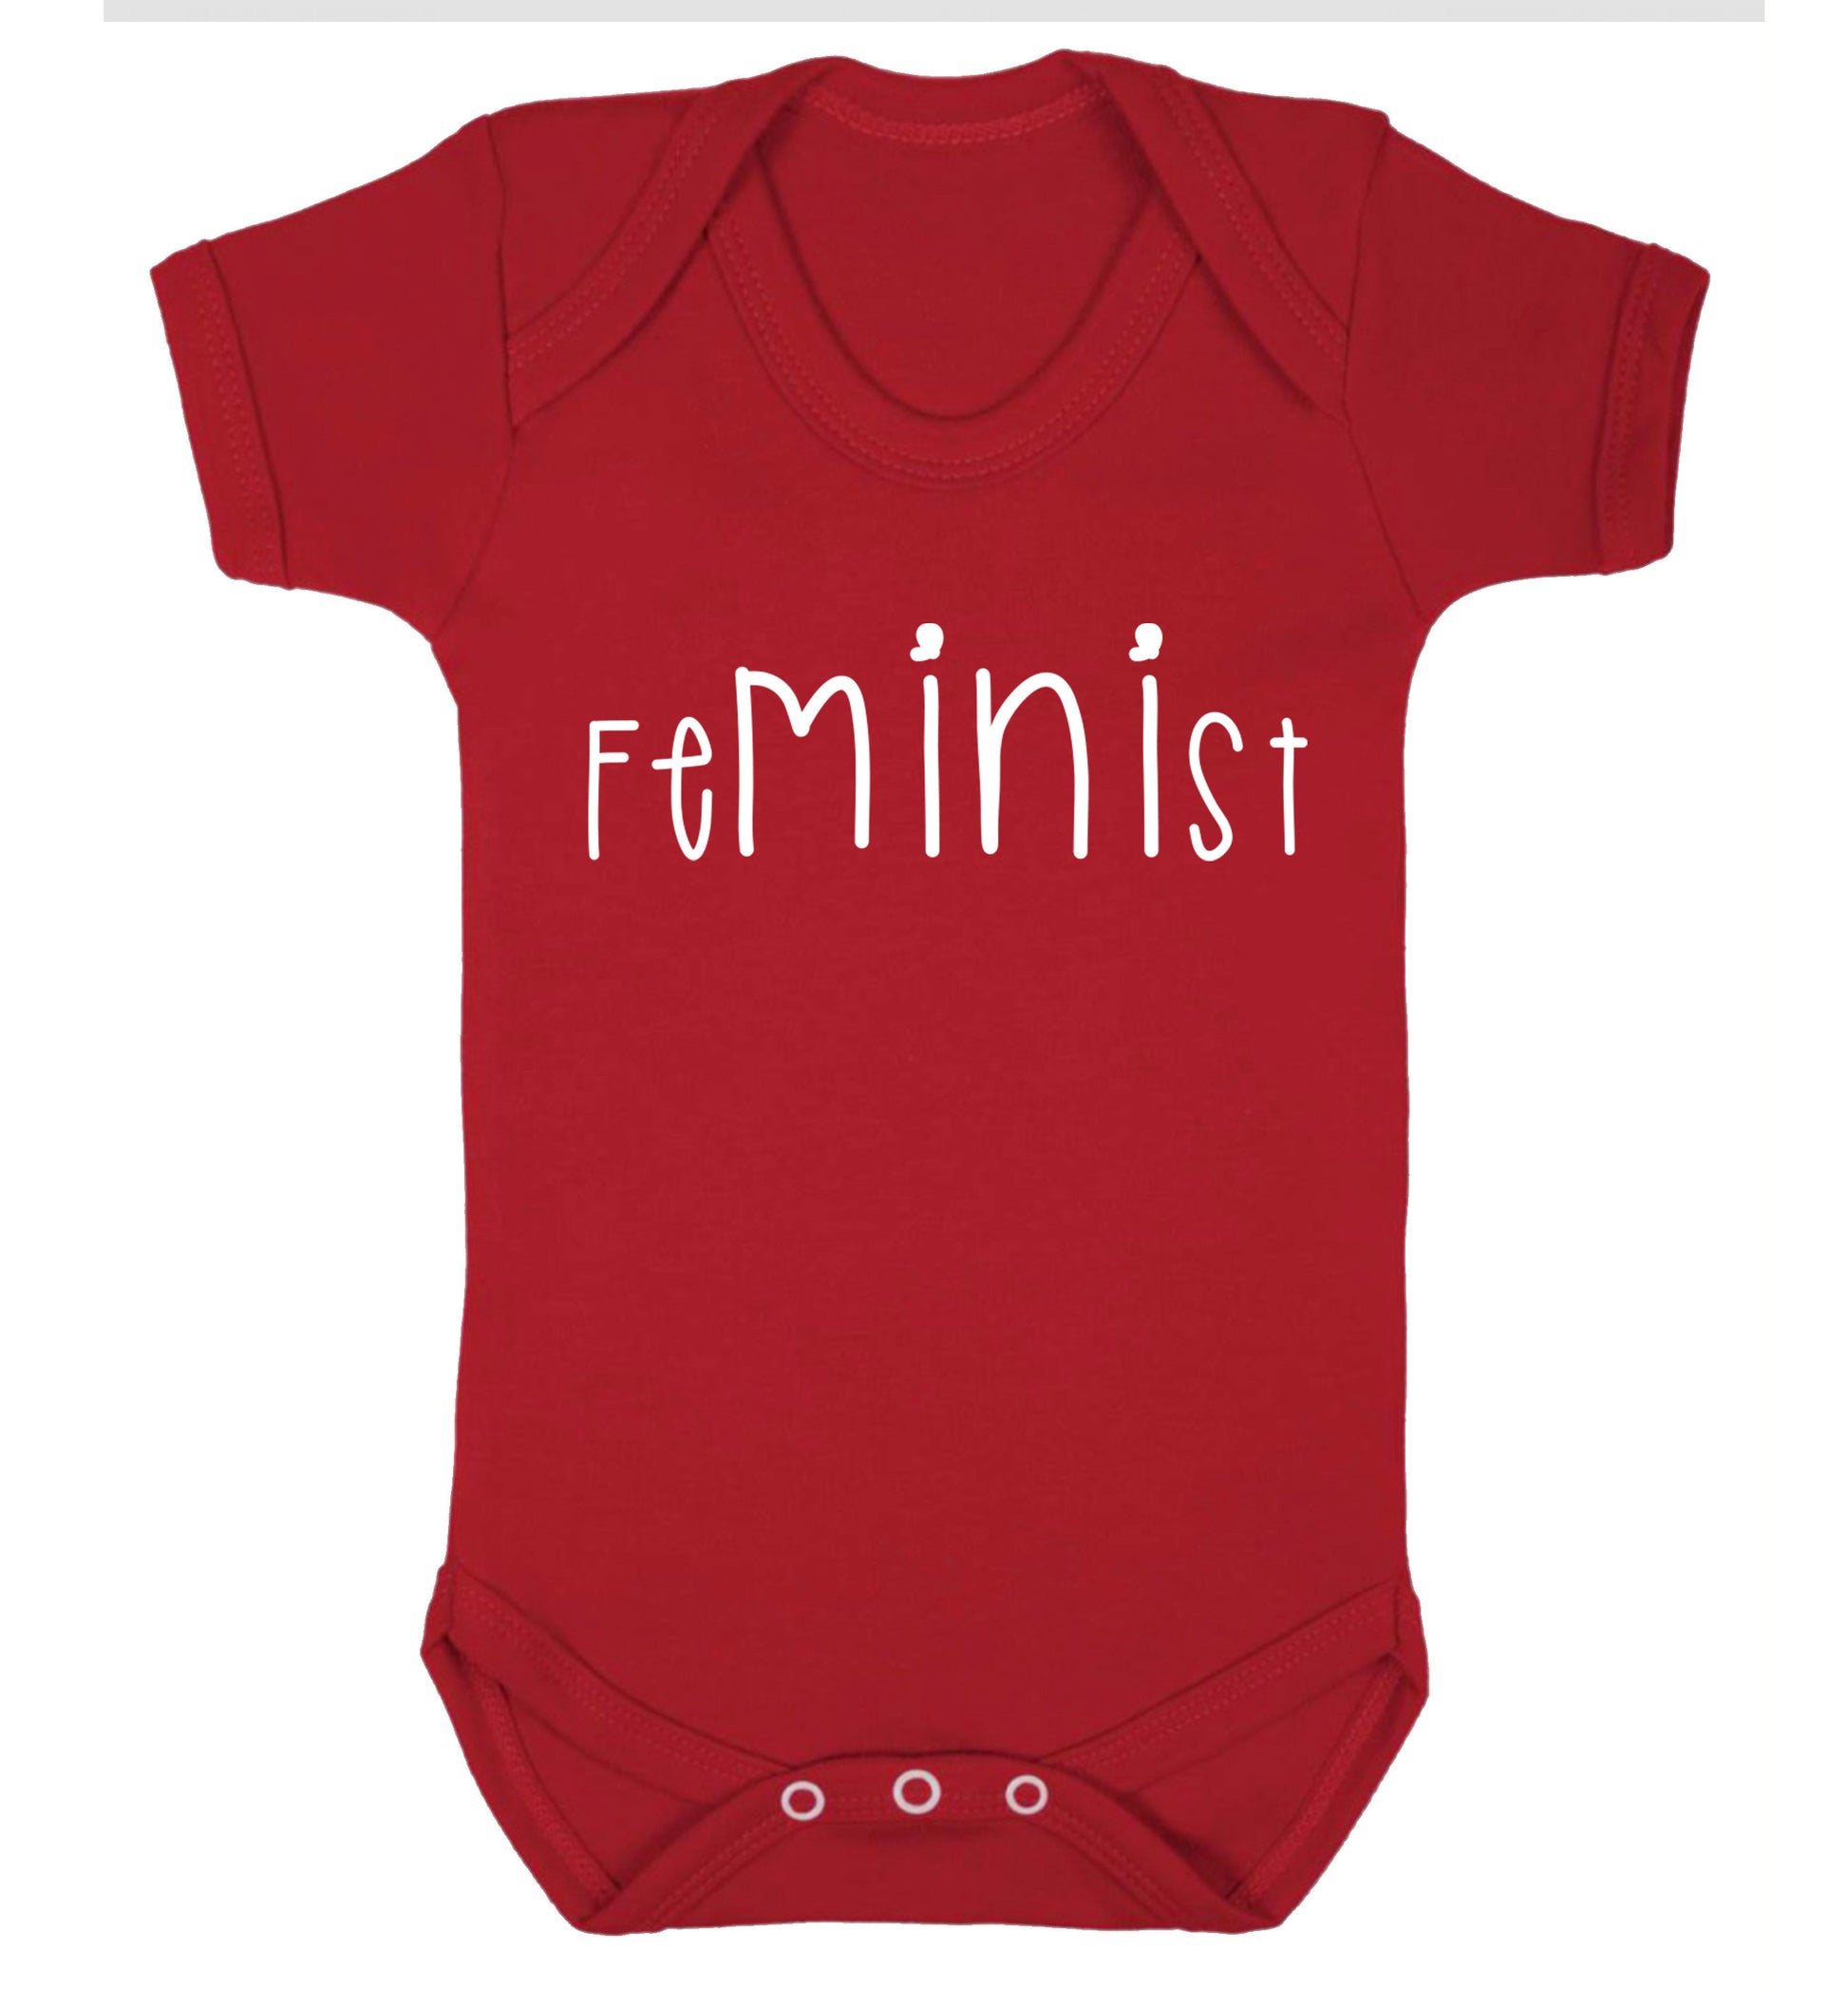 FeMINIst Baby Vest red 18-24 months